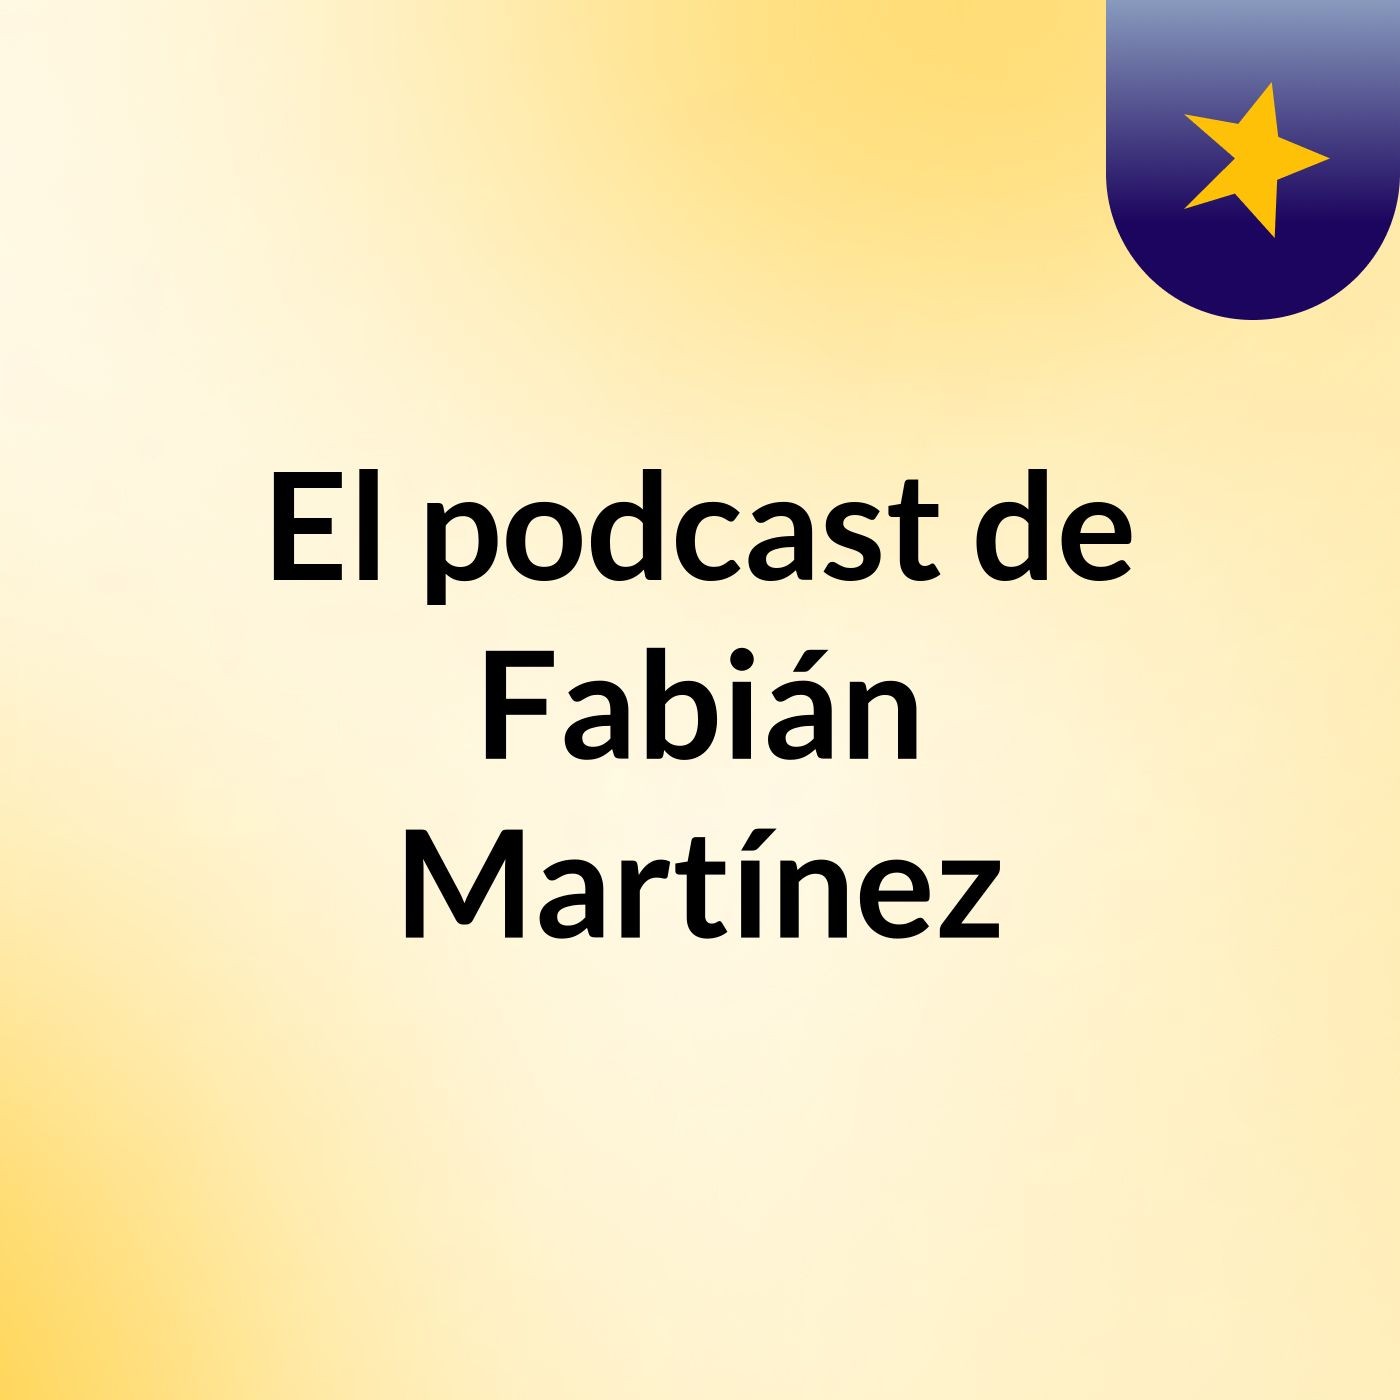 El podcast de Fabián Martínez